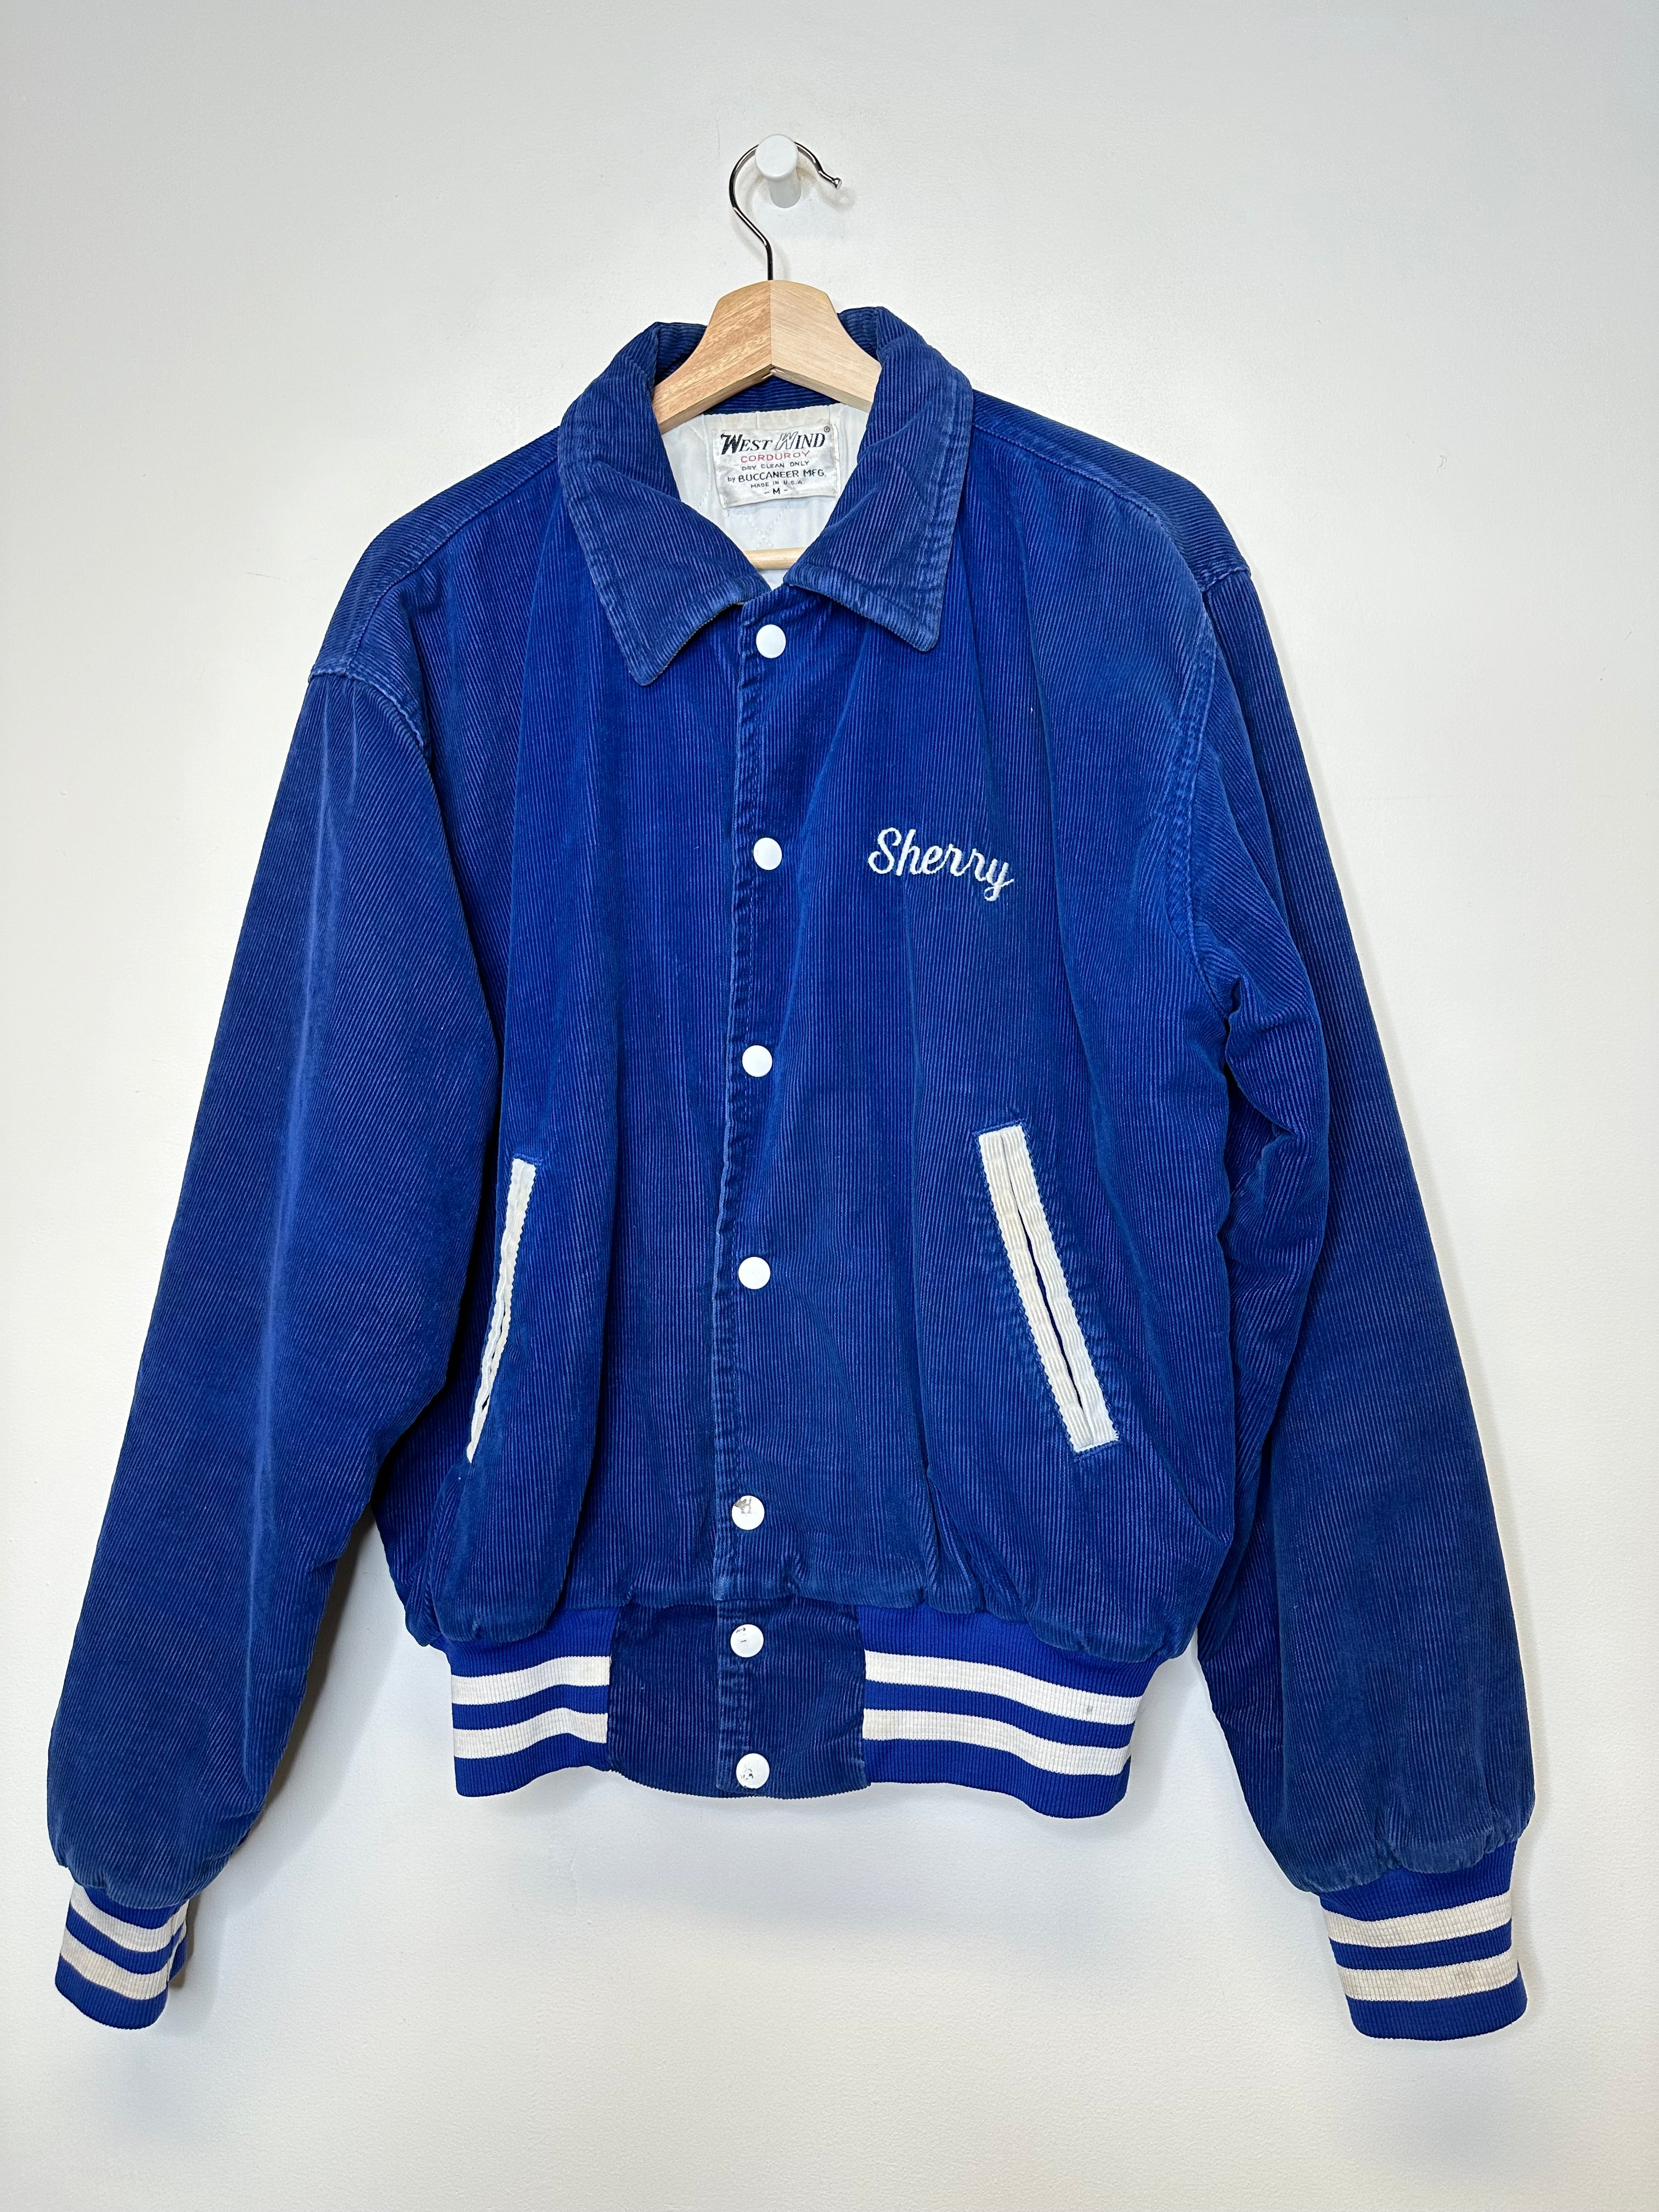 Vintage Blue Corduroy Jacket - XL *As-Is*